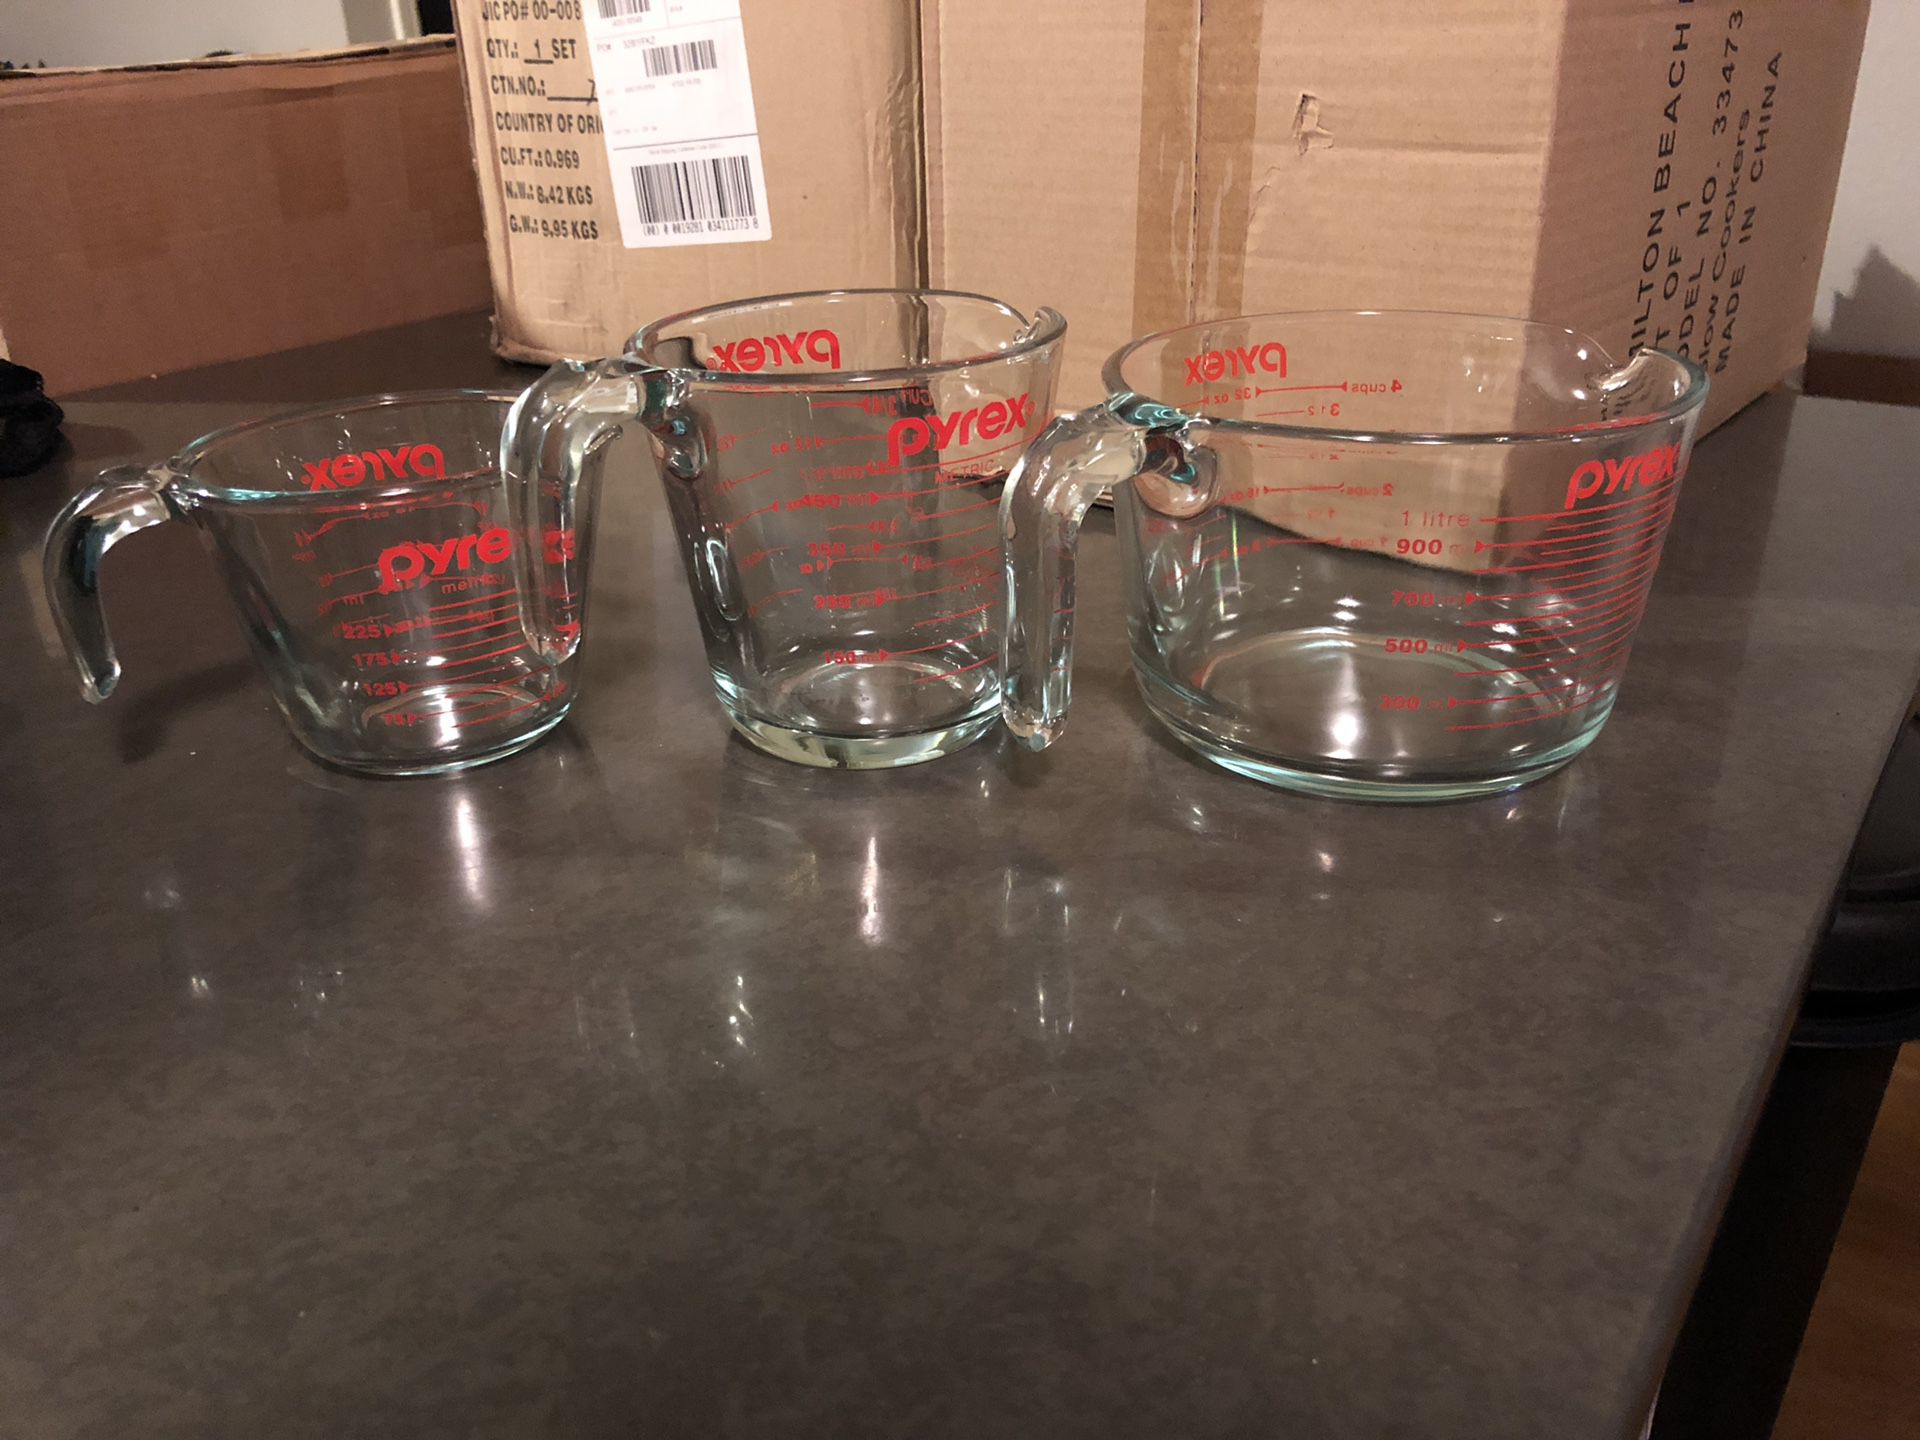 Set of Pyrex measuring cups